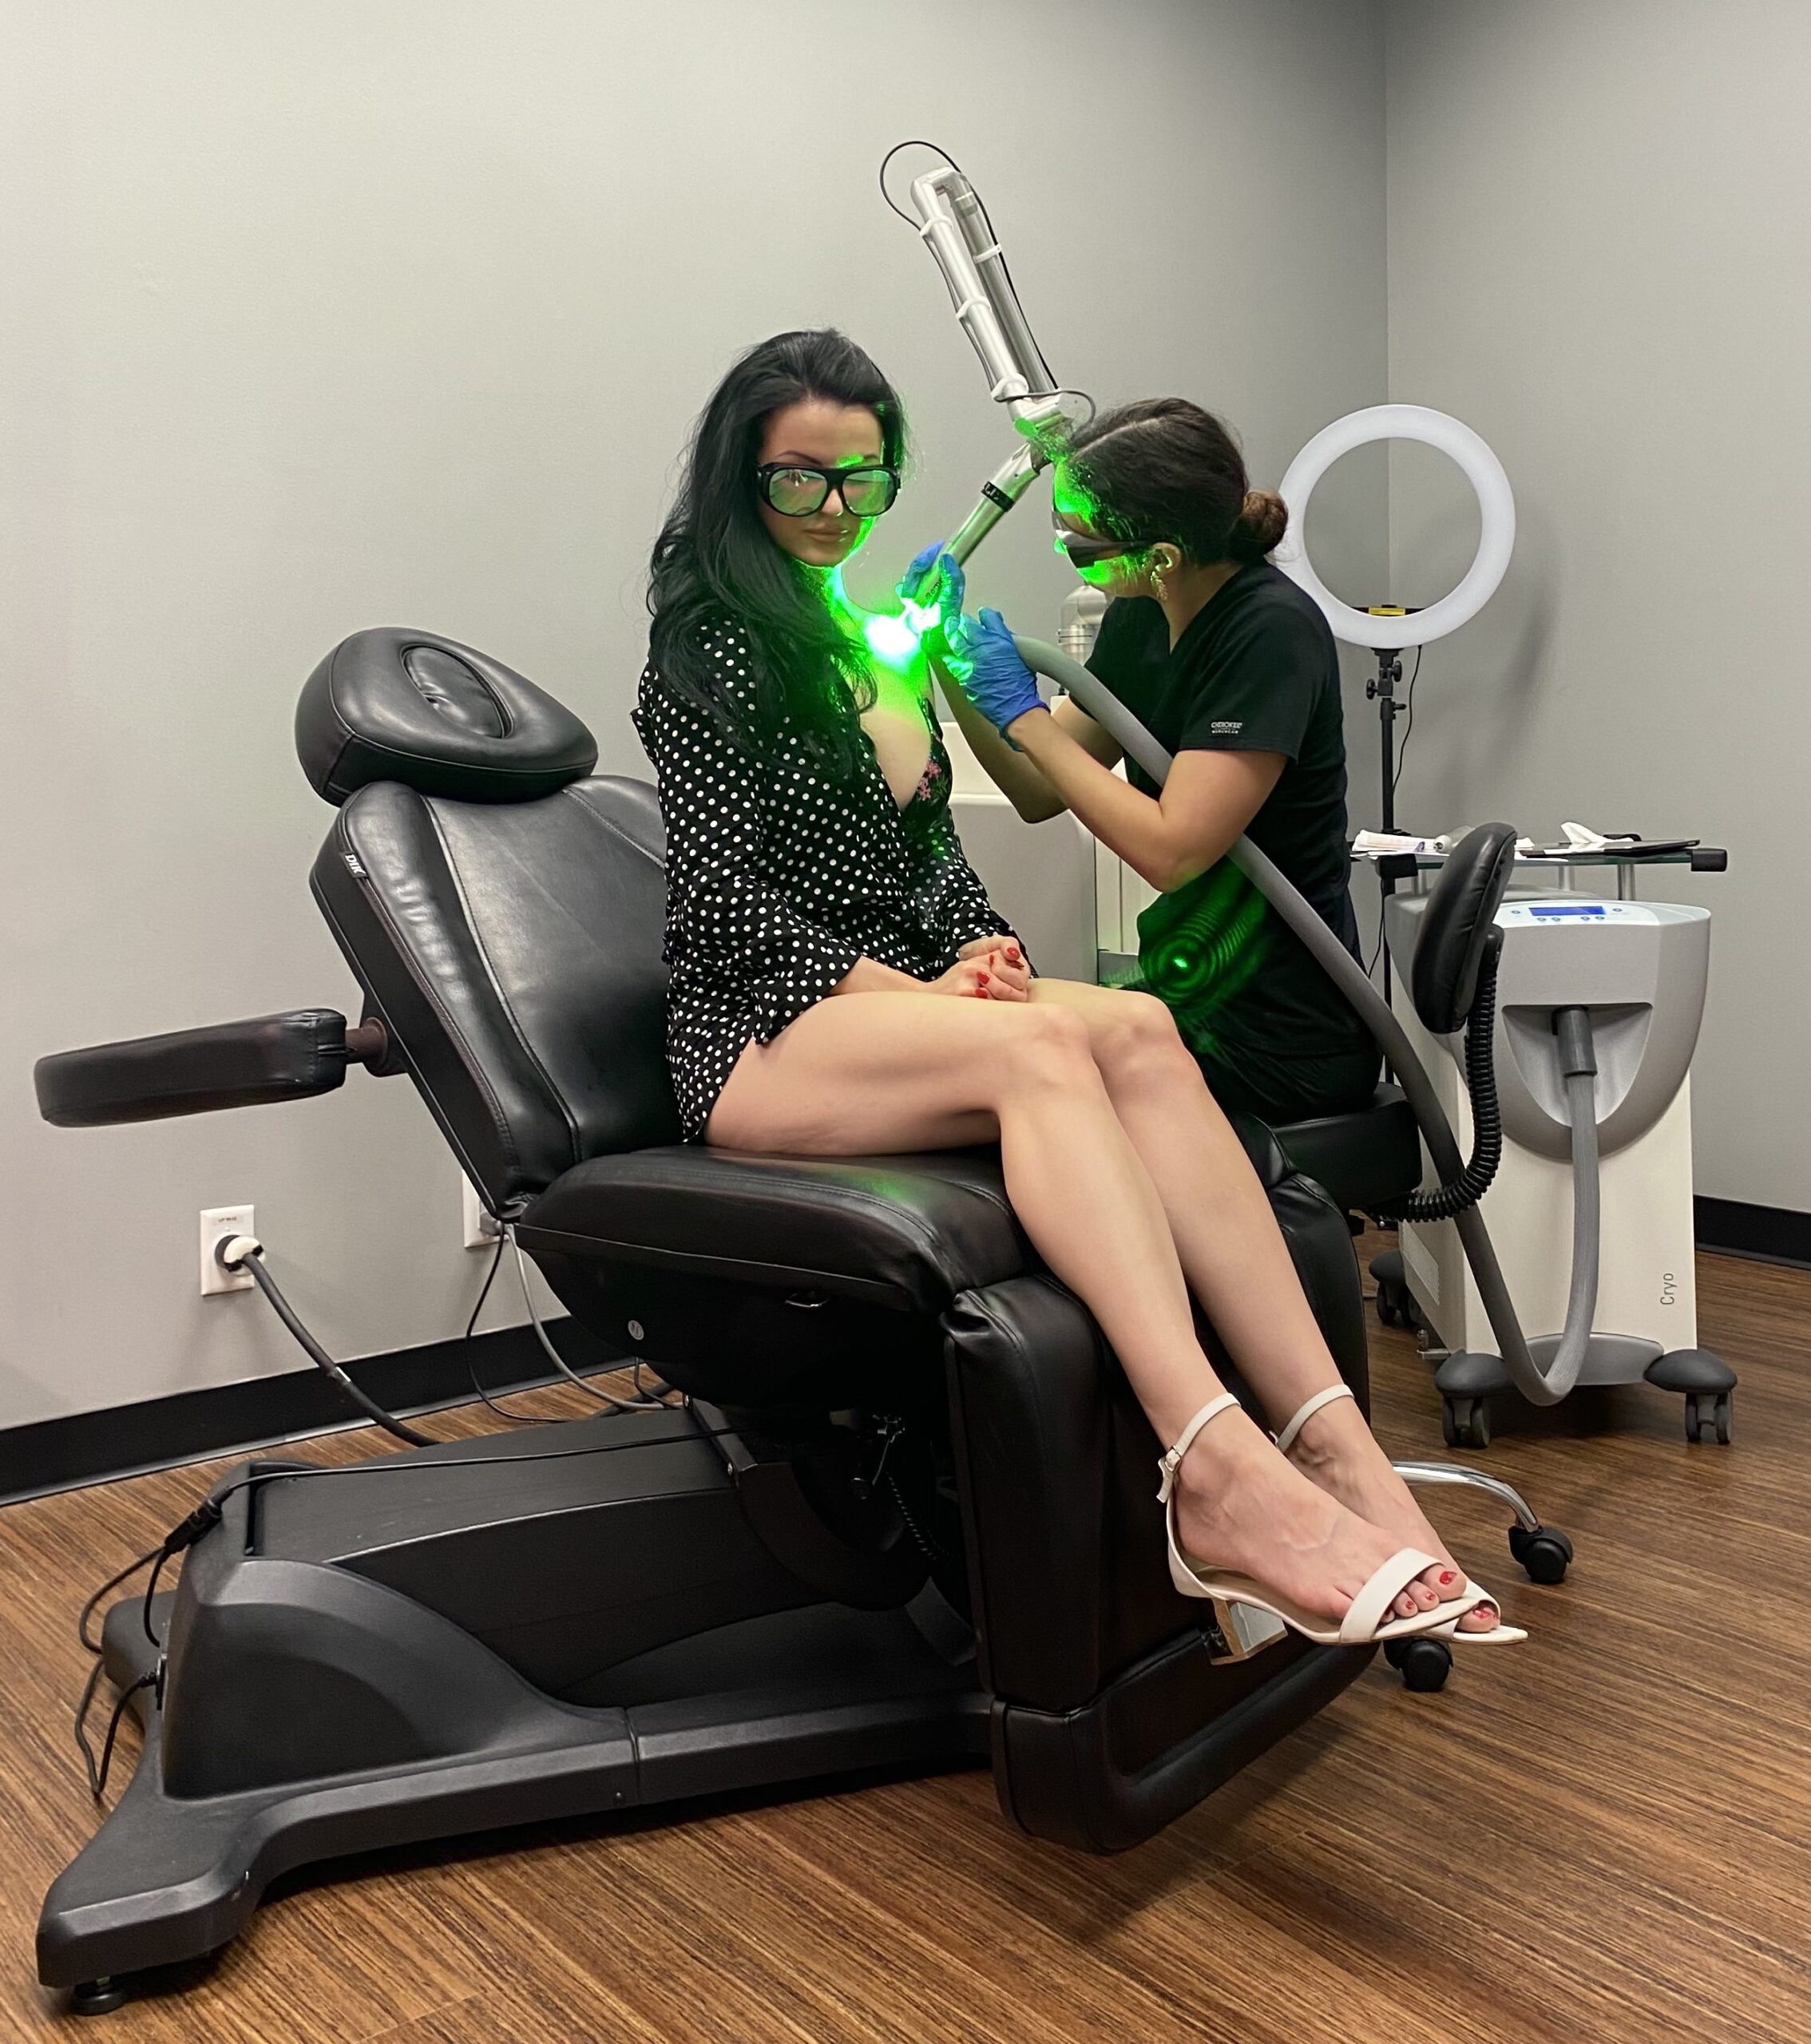 veronika poloprutska Veronica LaVery tattoos laser young tattoo laser removal dr tattoff